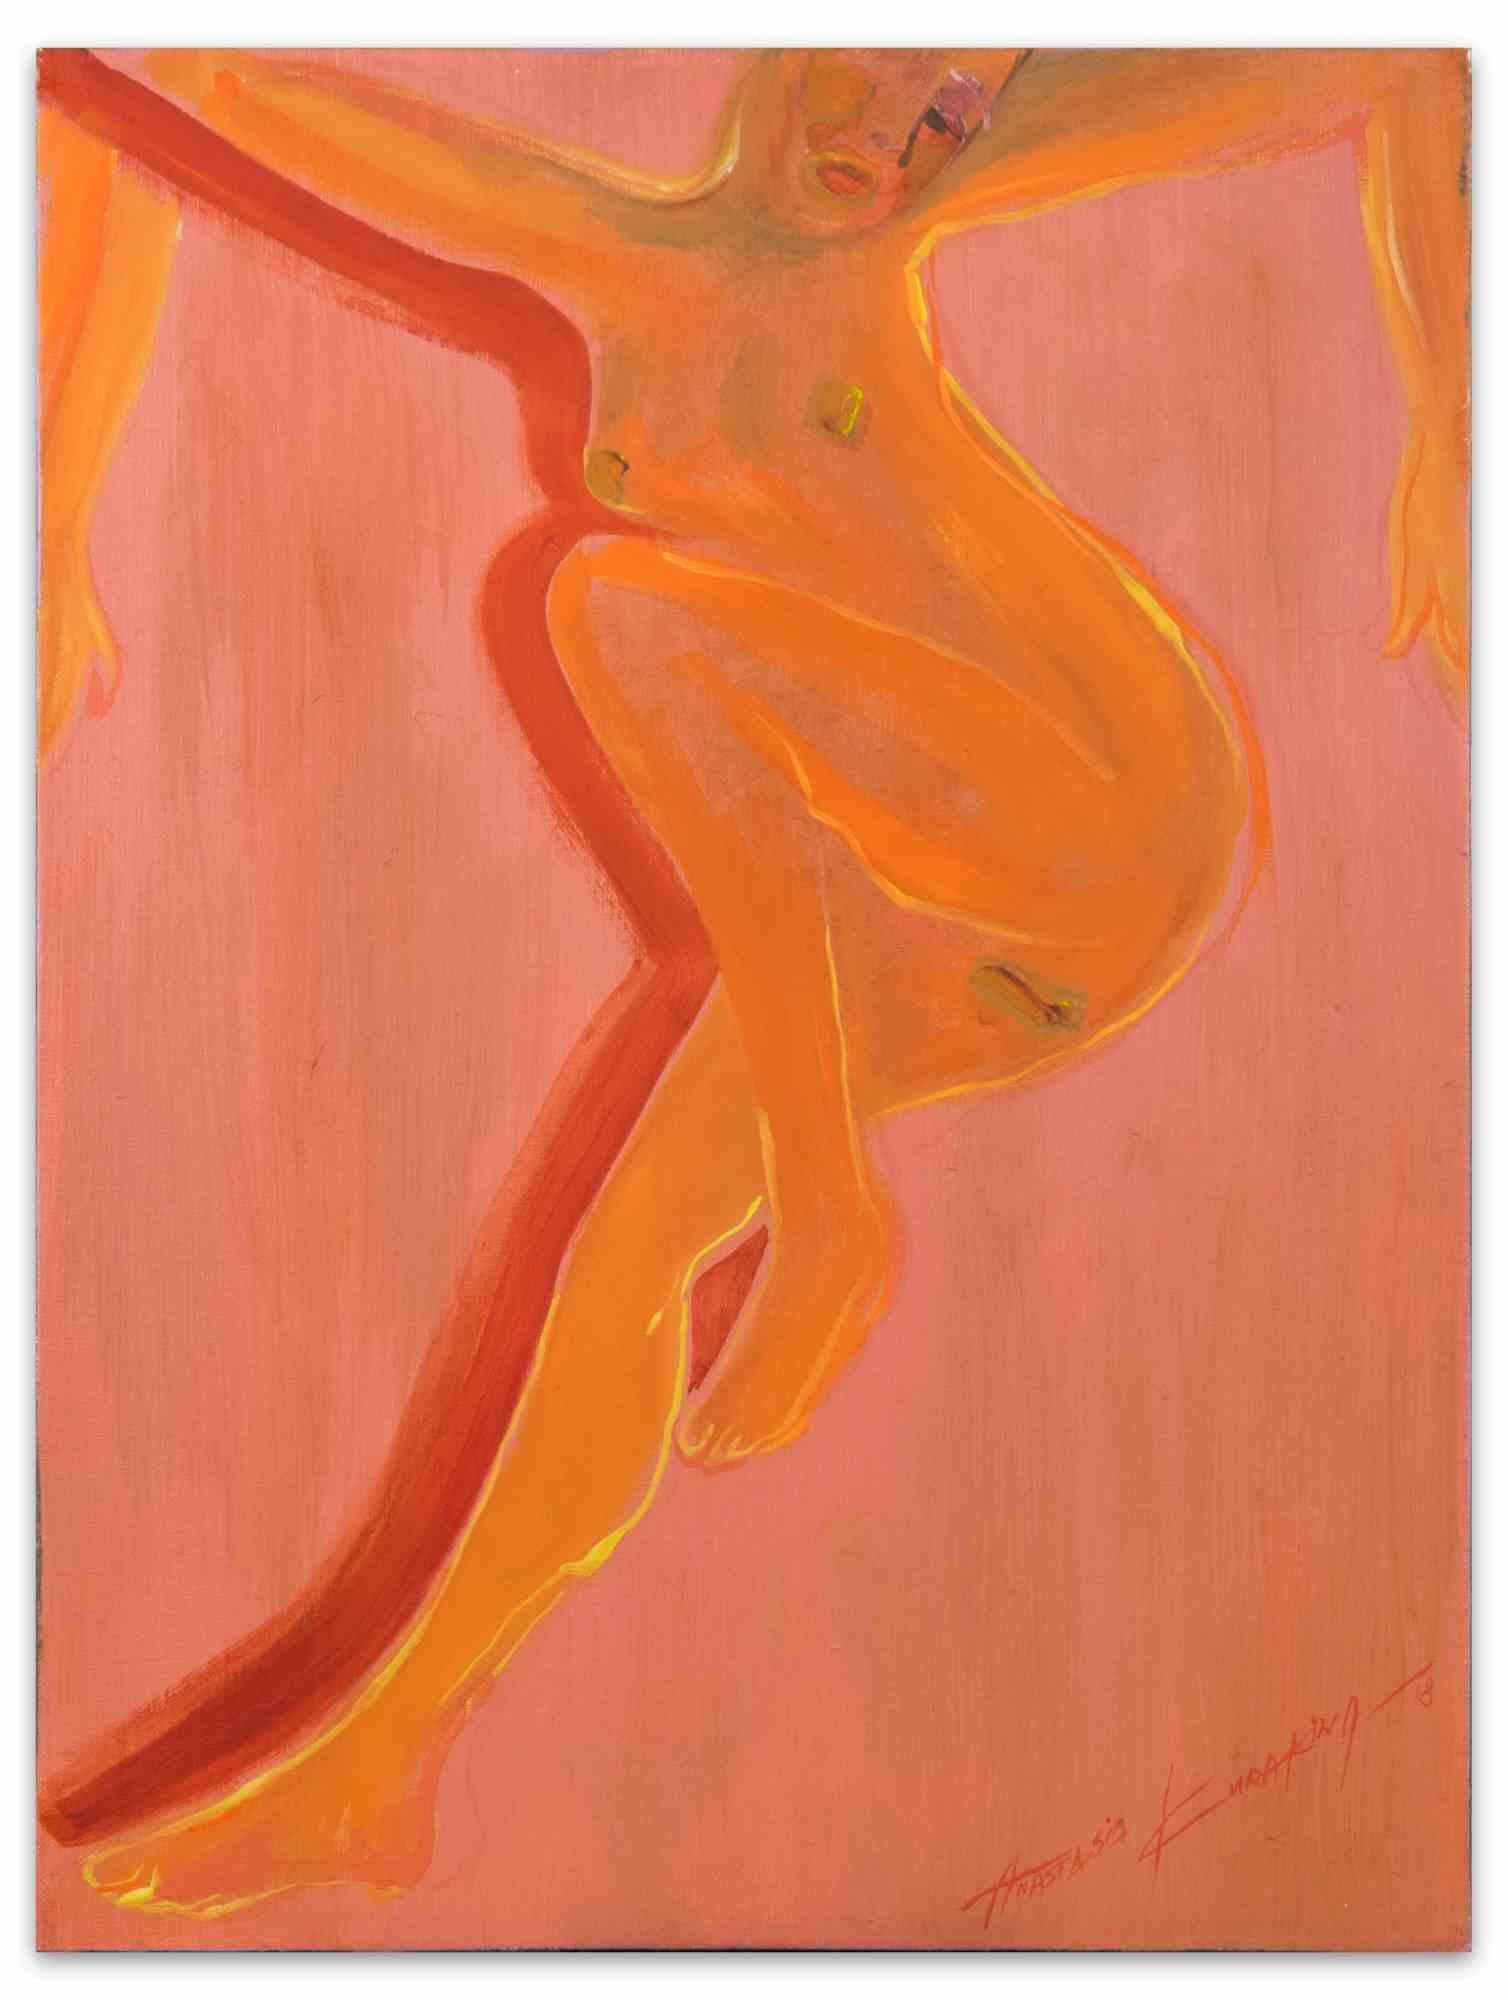 Woman in Orange - Oil Painting  by Anastasia Kurakina - 2018